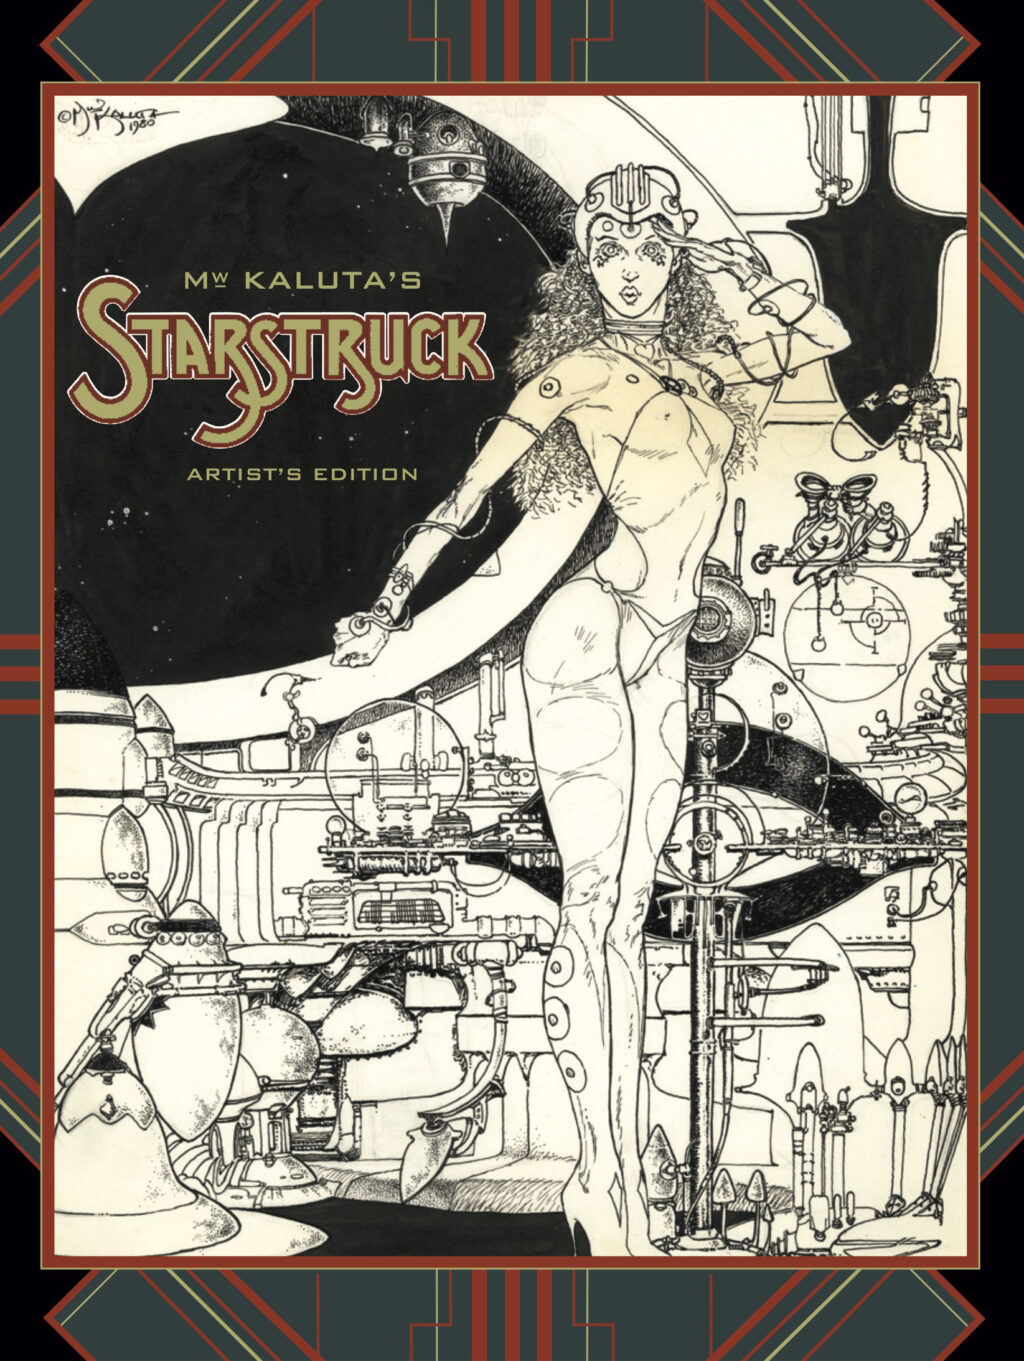 Michael Wm. Kaluta’s Starstruck: Artist’s Edition cover prelim